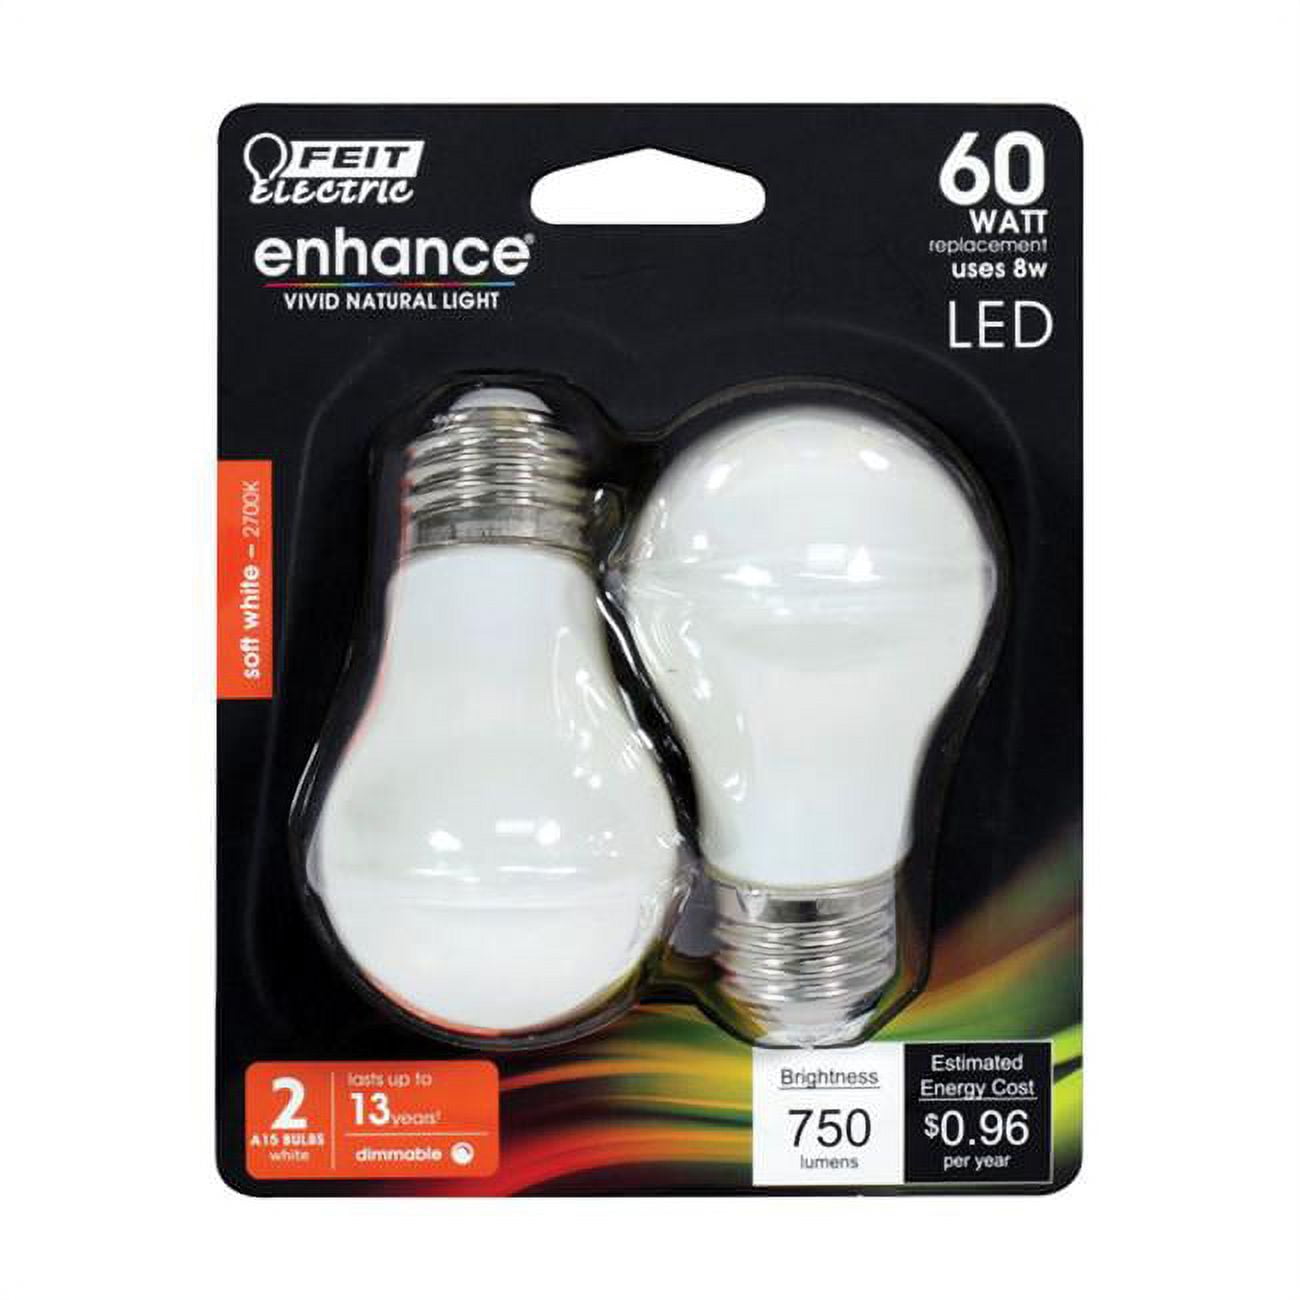 3910783 8w A15 Enhance Filament Led Bulb, 750 Lumens - Soft White